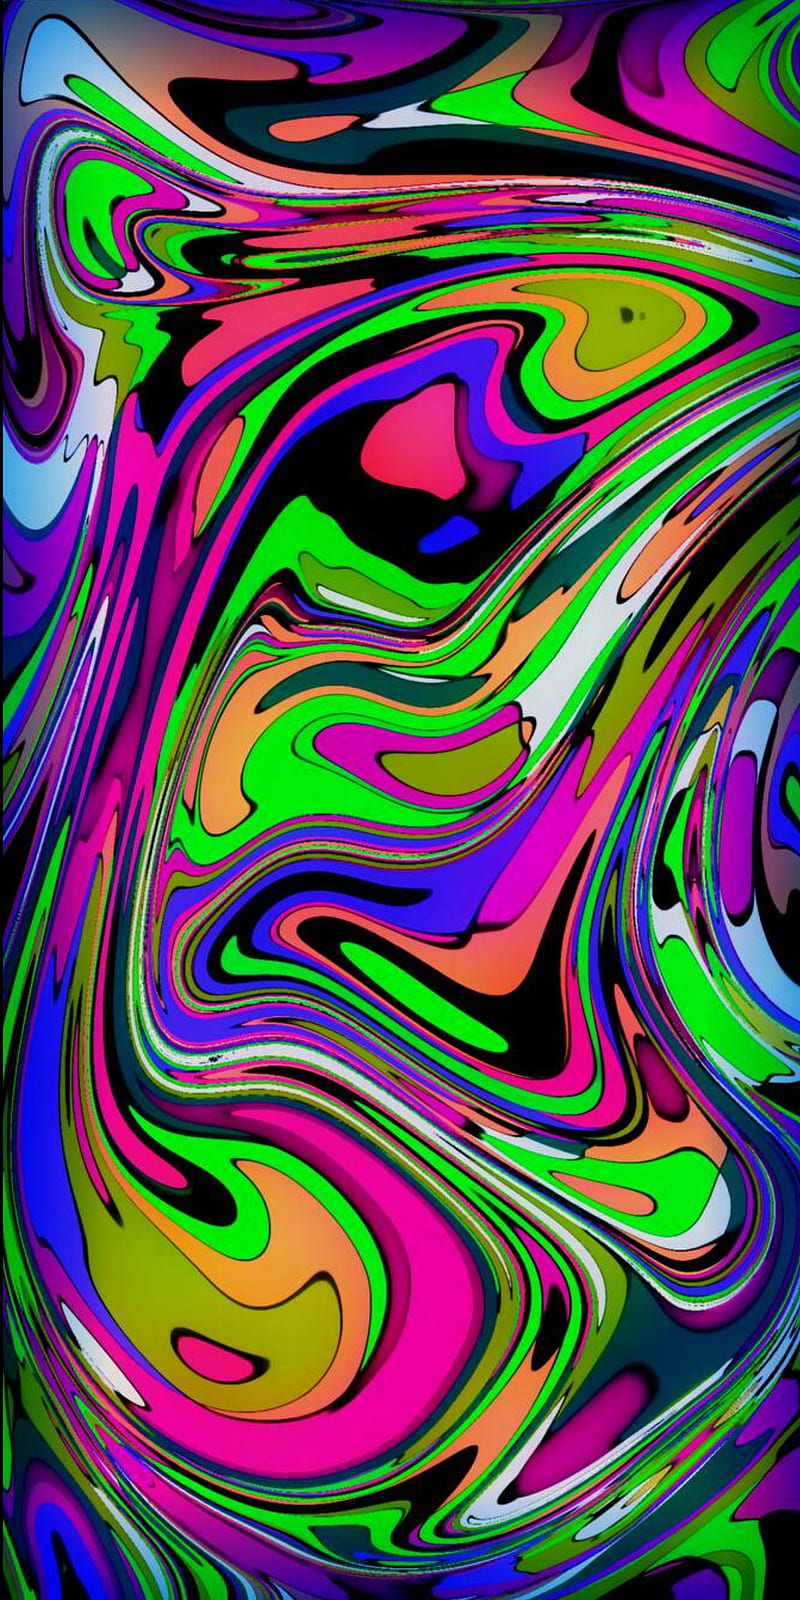 iPhoneXpaperscom  iPhone X wallpaper  vn07psychedelicartpattern